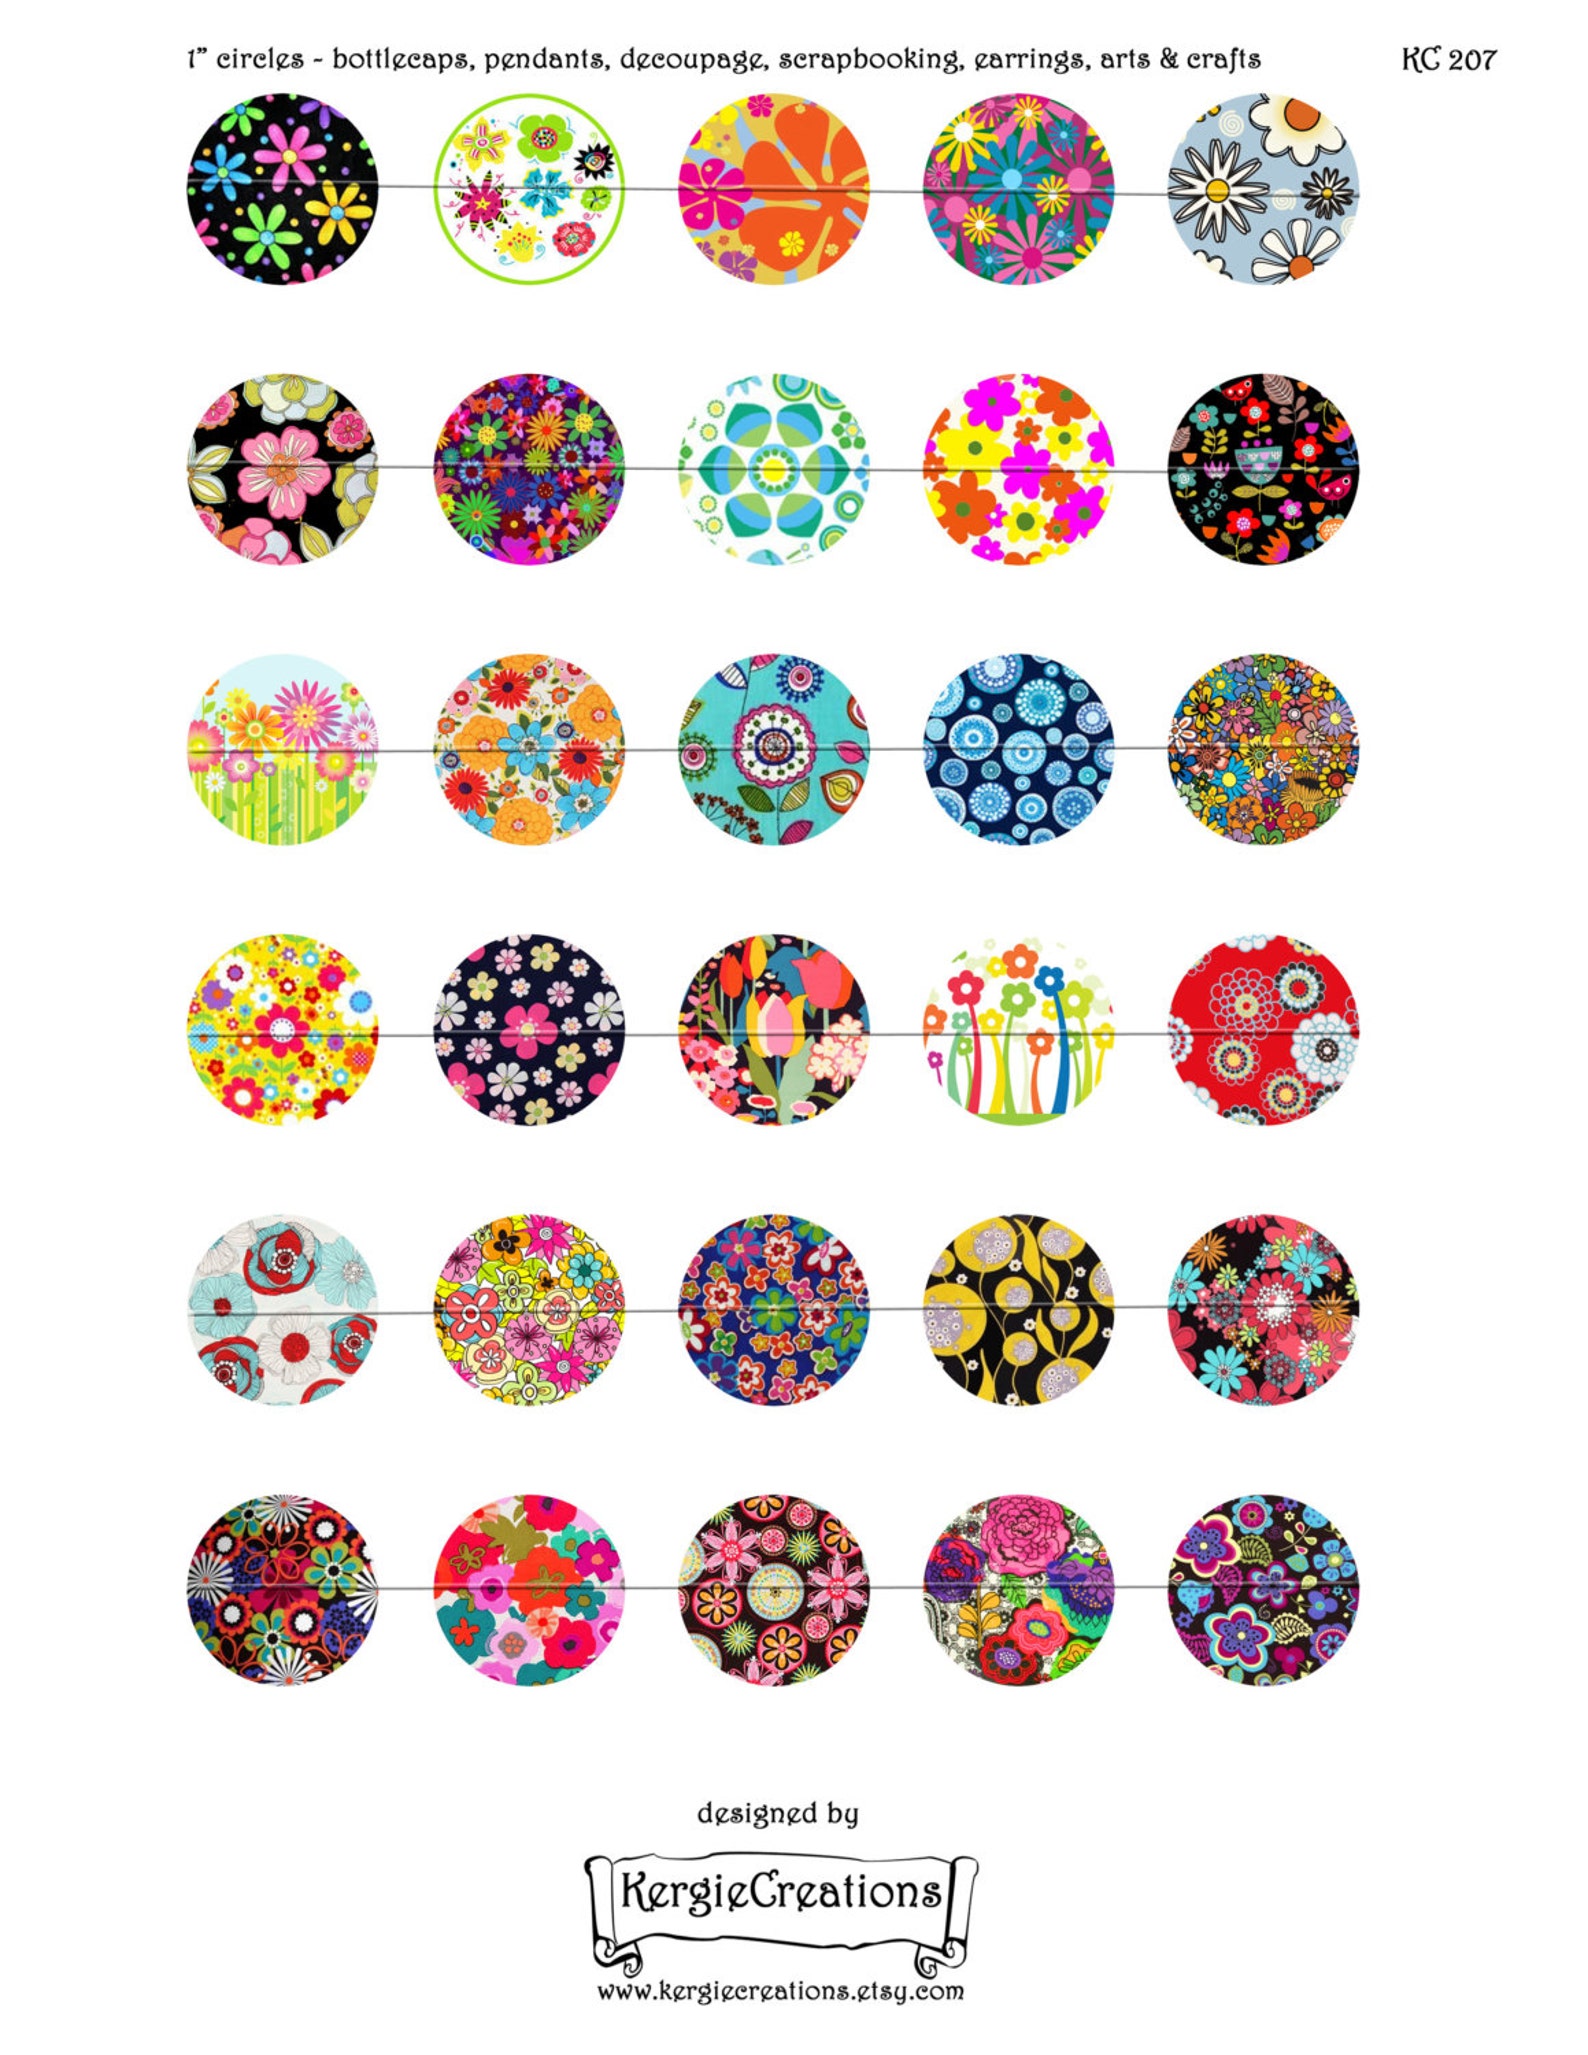 RETRO FUNKY FLOWERS 30 x 1 round images pendants | Etsy